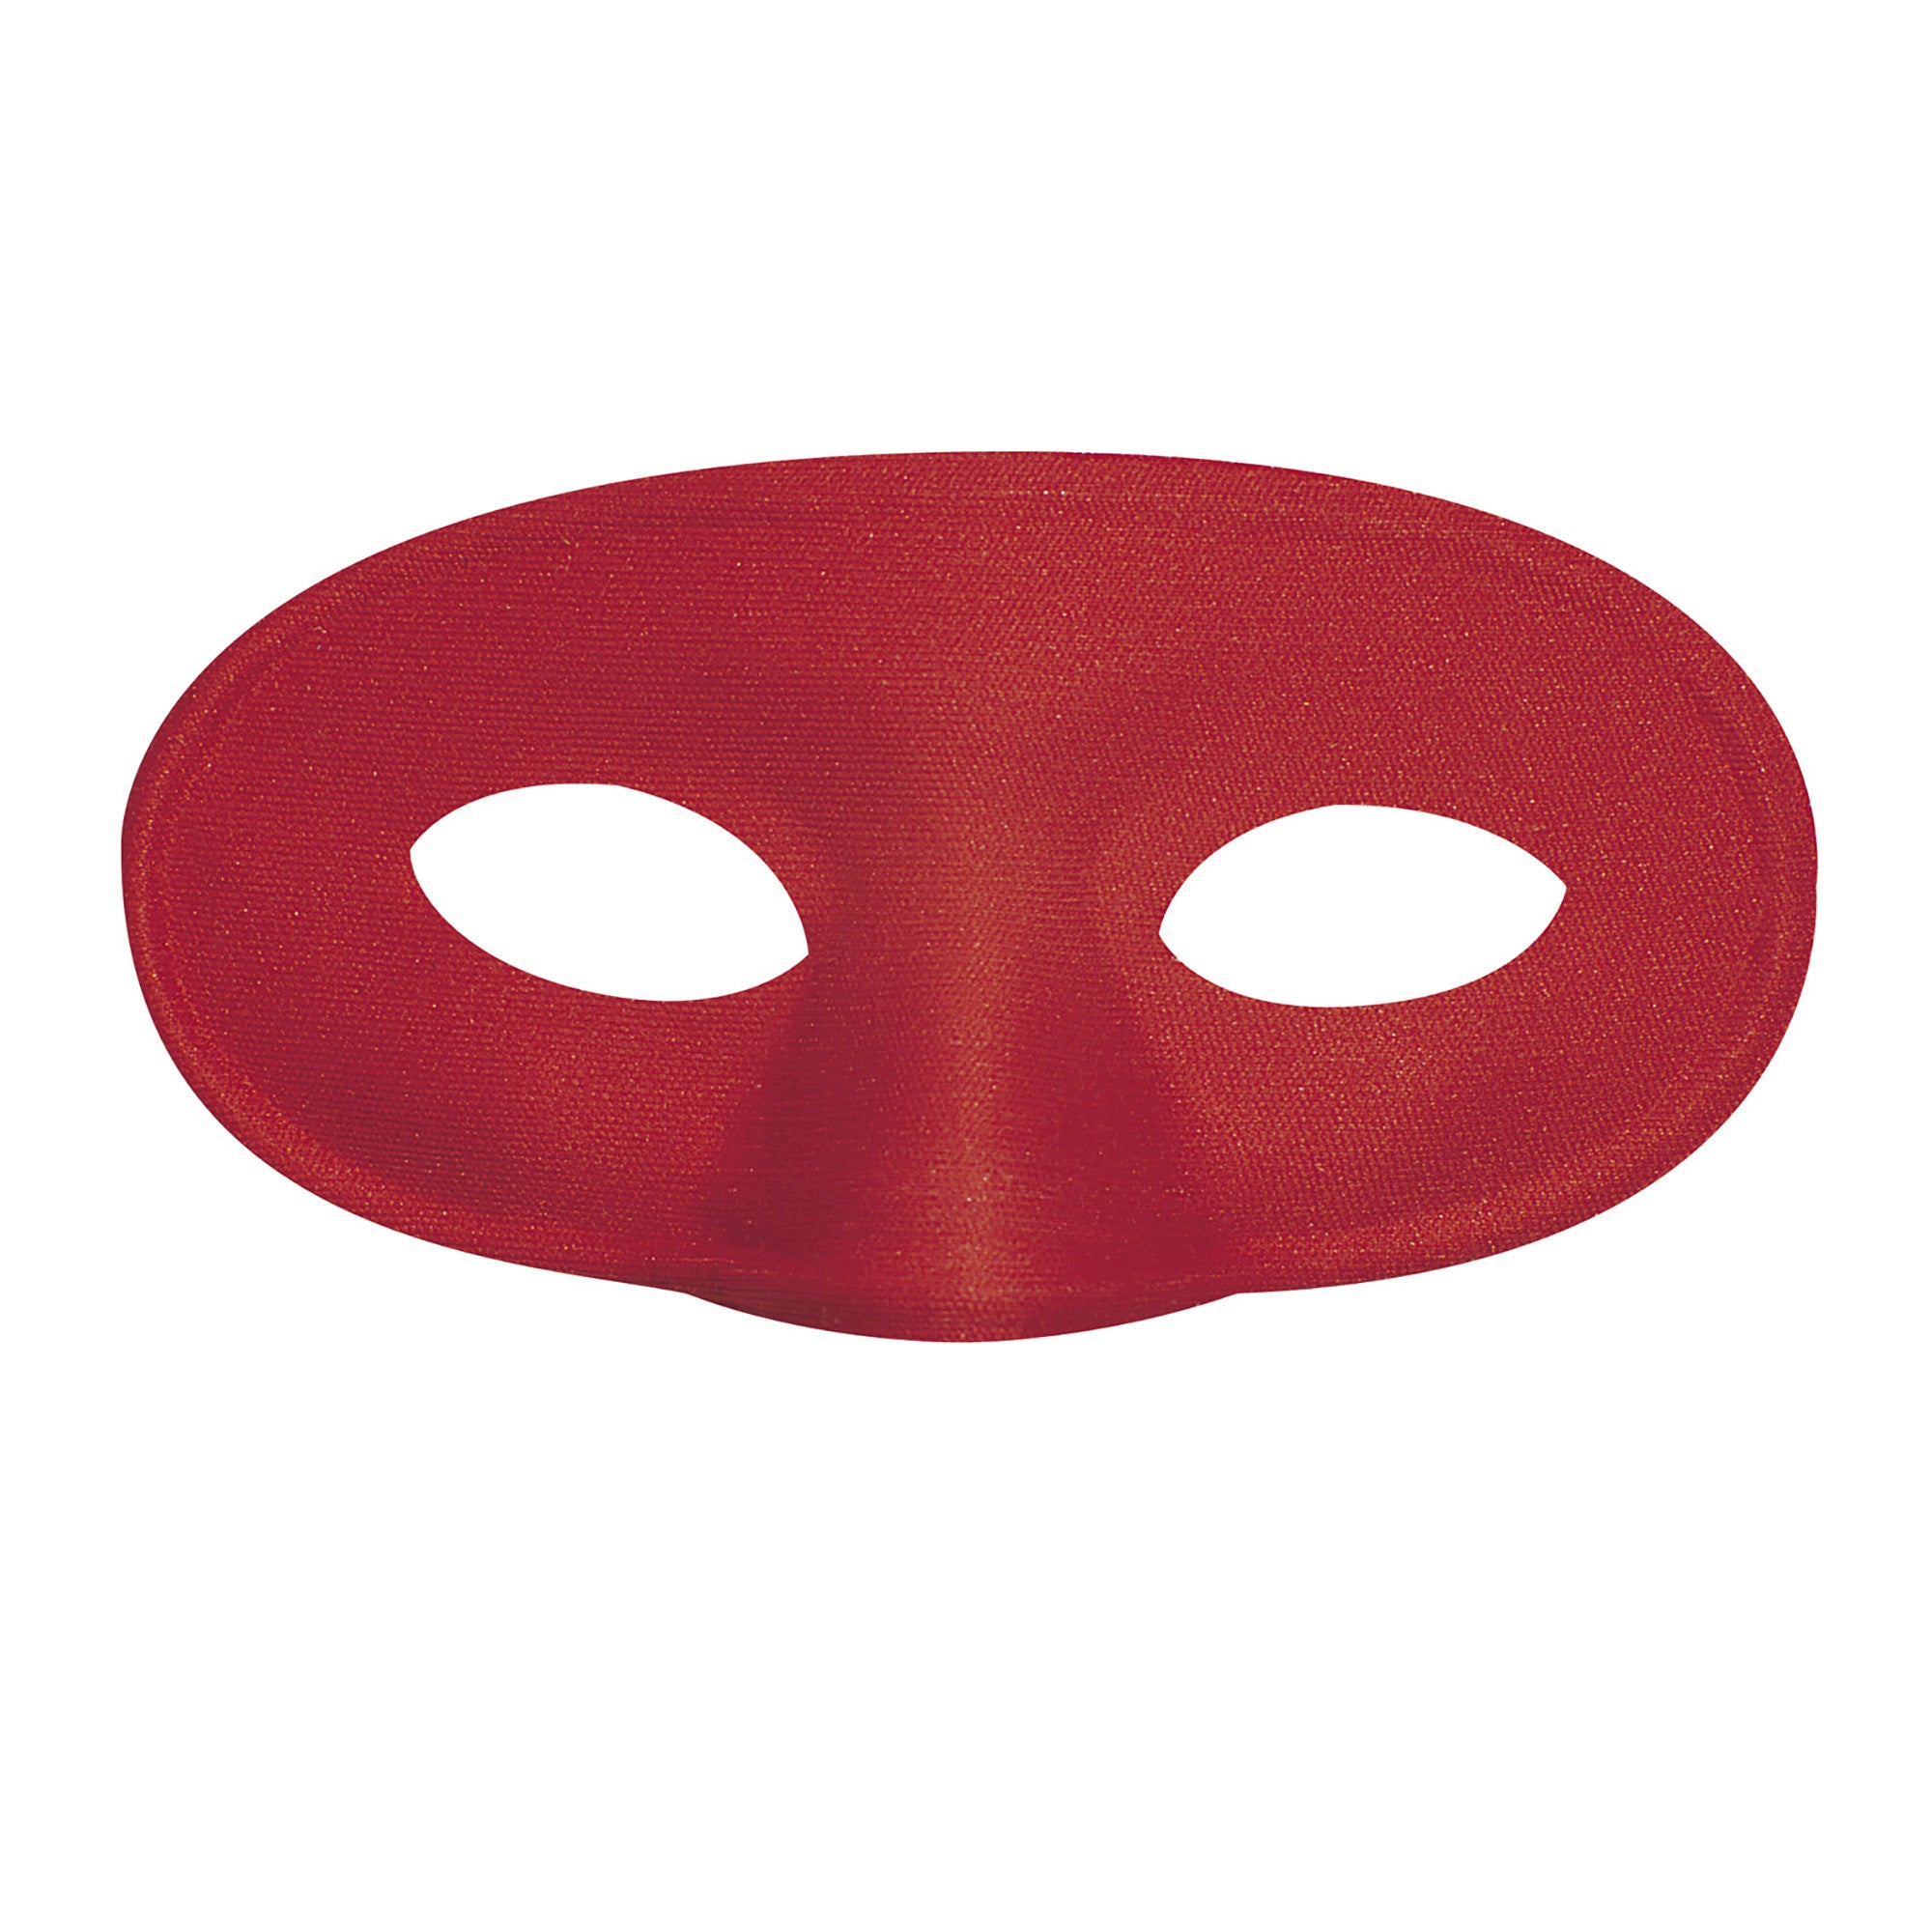 Widmann -Ovaal Oogmasker Mascherina Rood Kind - rood - Carnavalskleding - Verkleedkleding